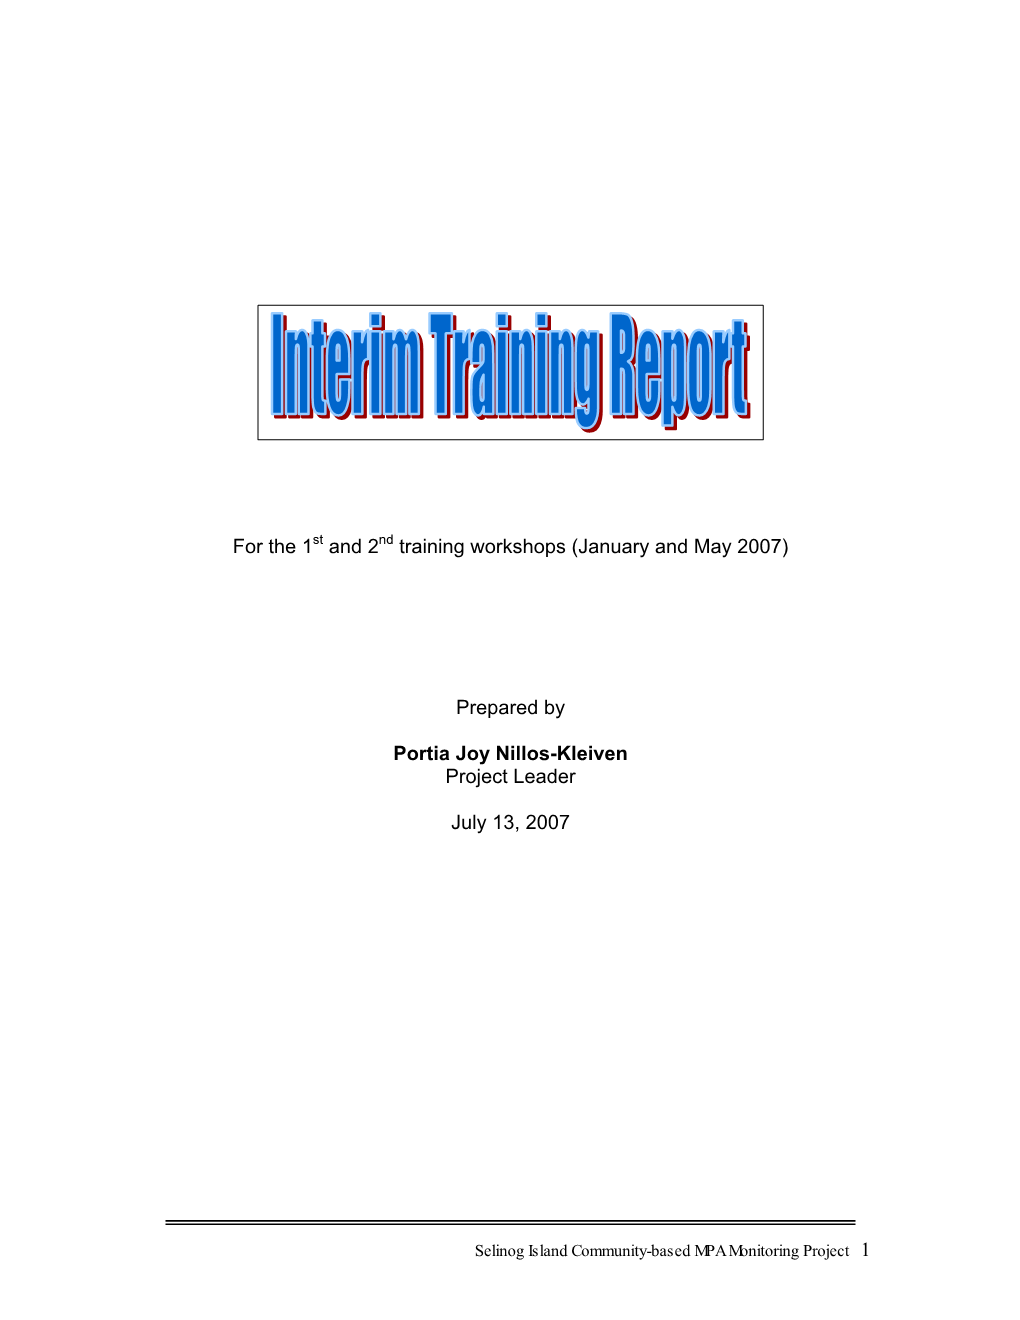 2Nd Training Report